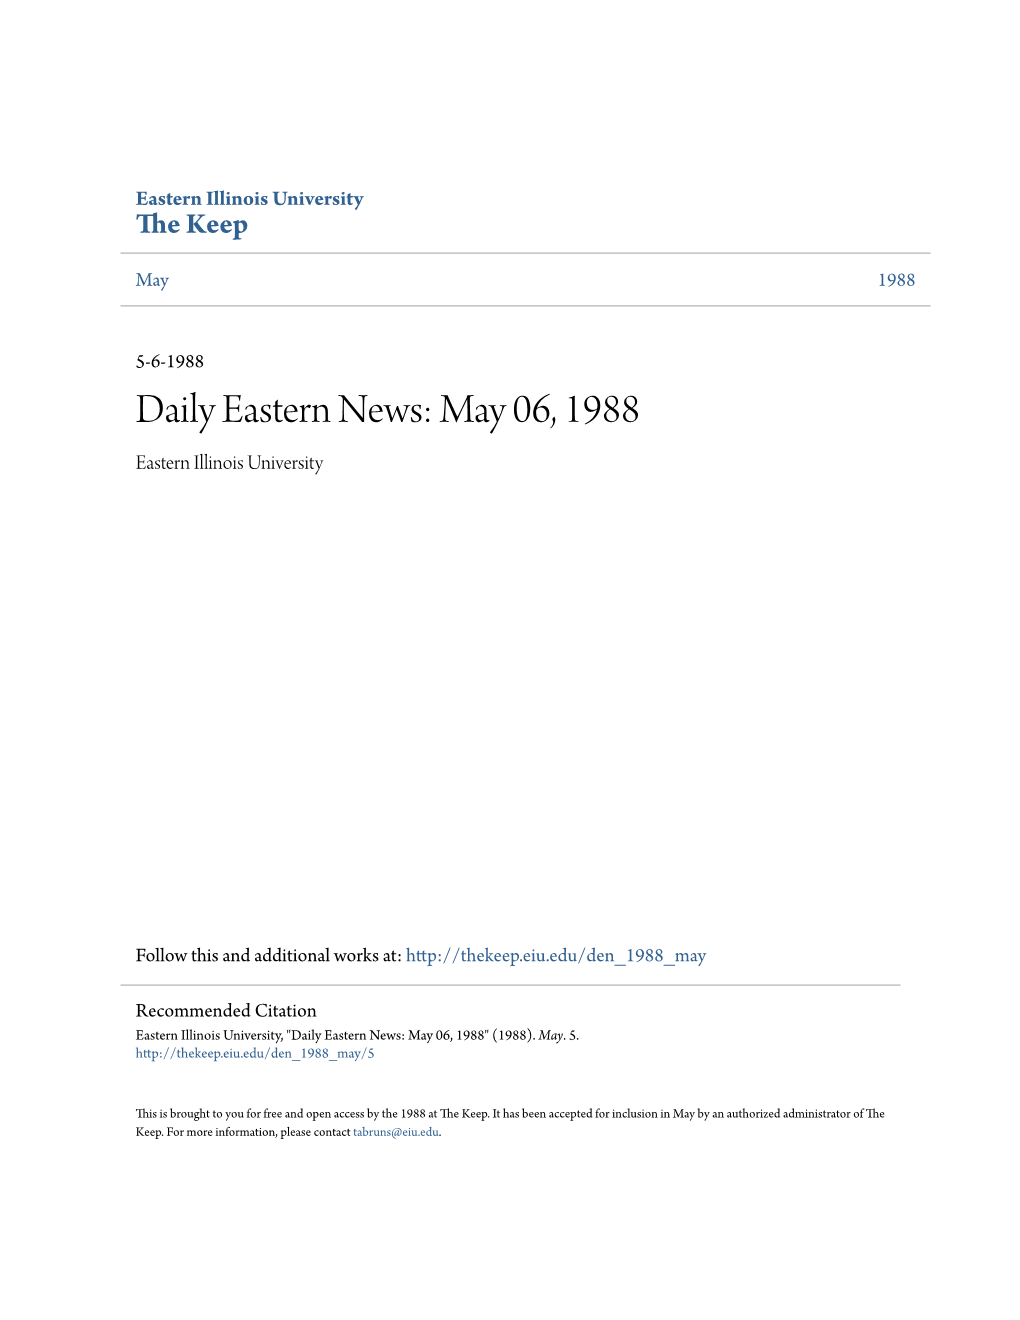 Daily Eastern News: May 06, 1988 Eastern Illinois University